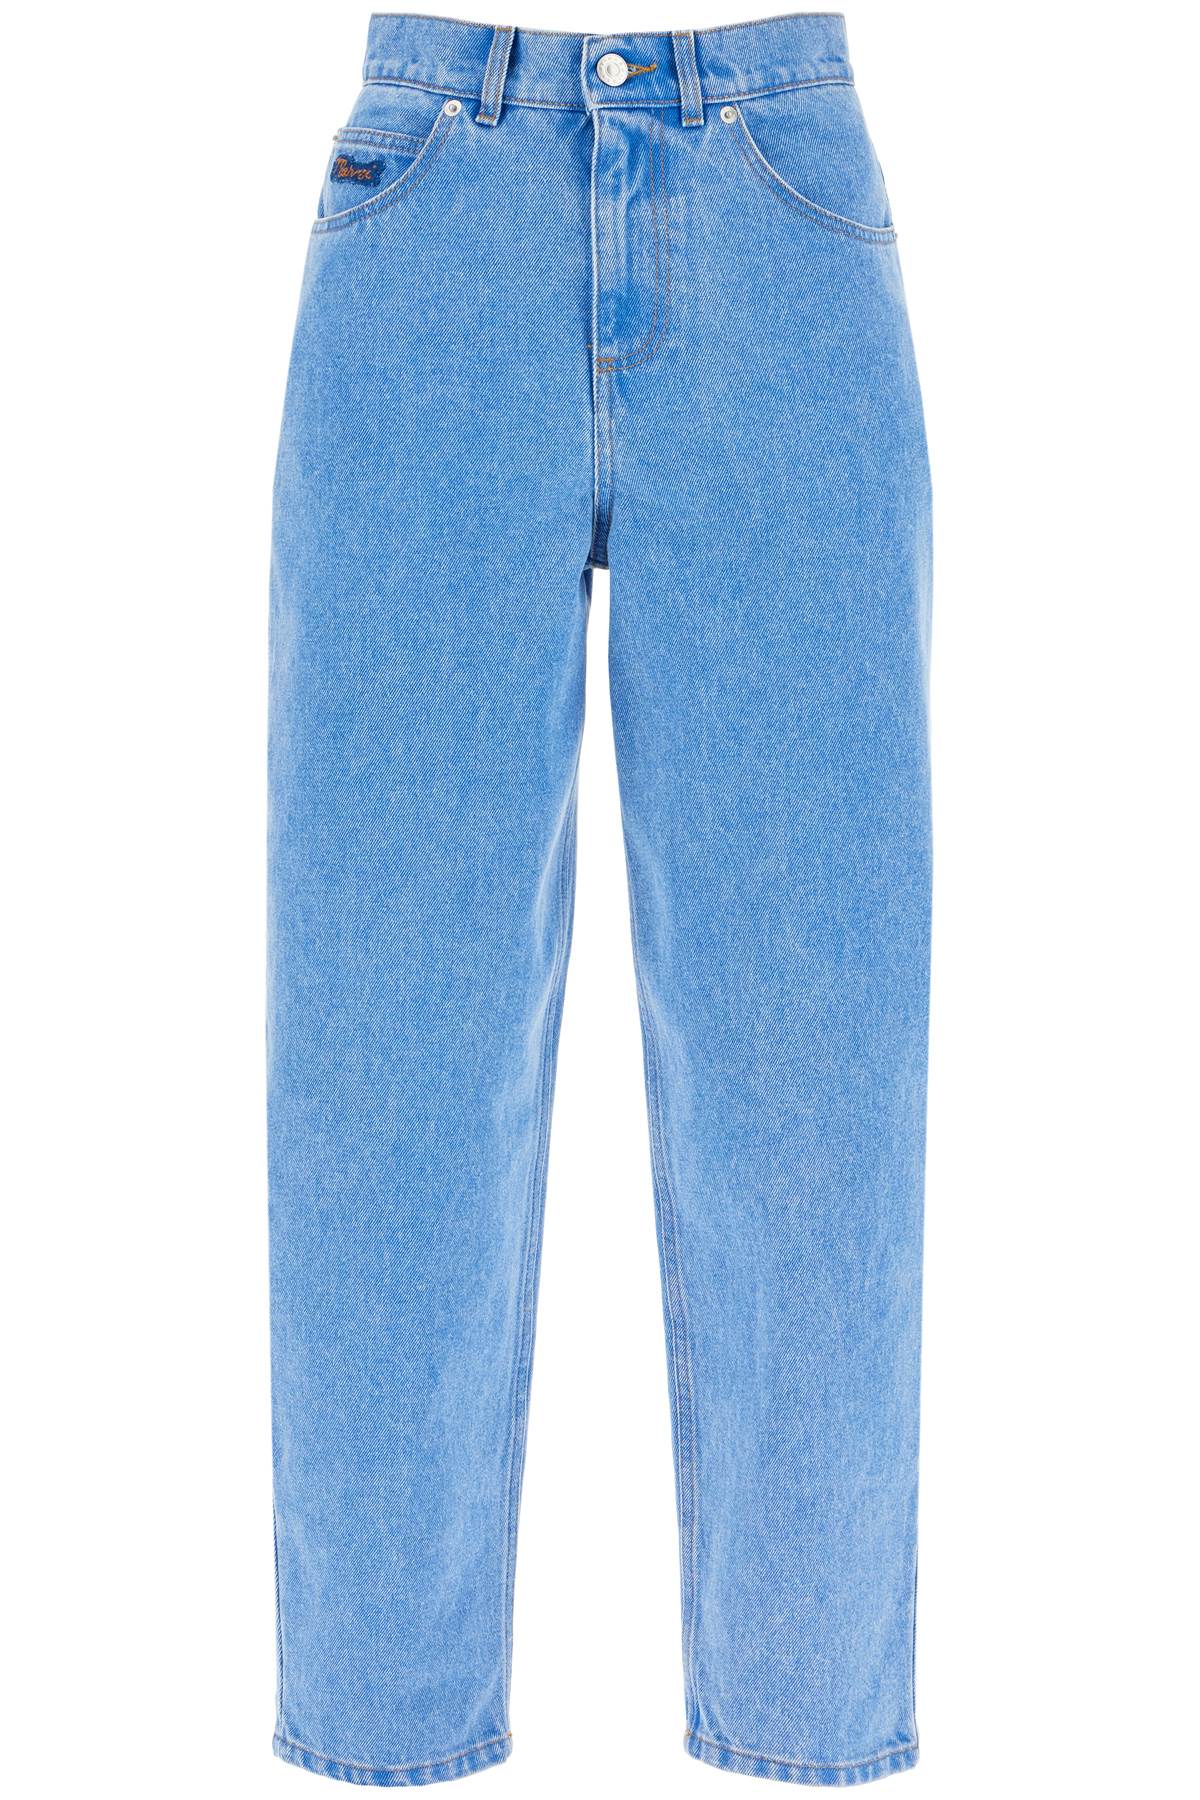 Marni MARNI organic denim cropped jeans in